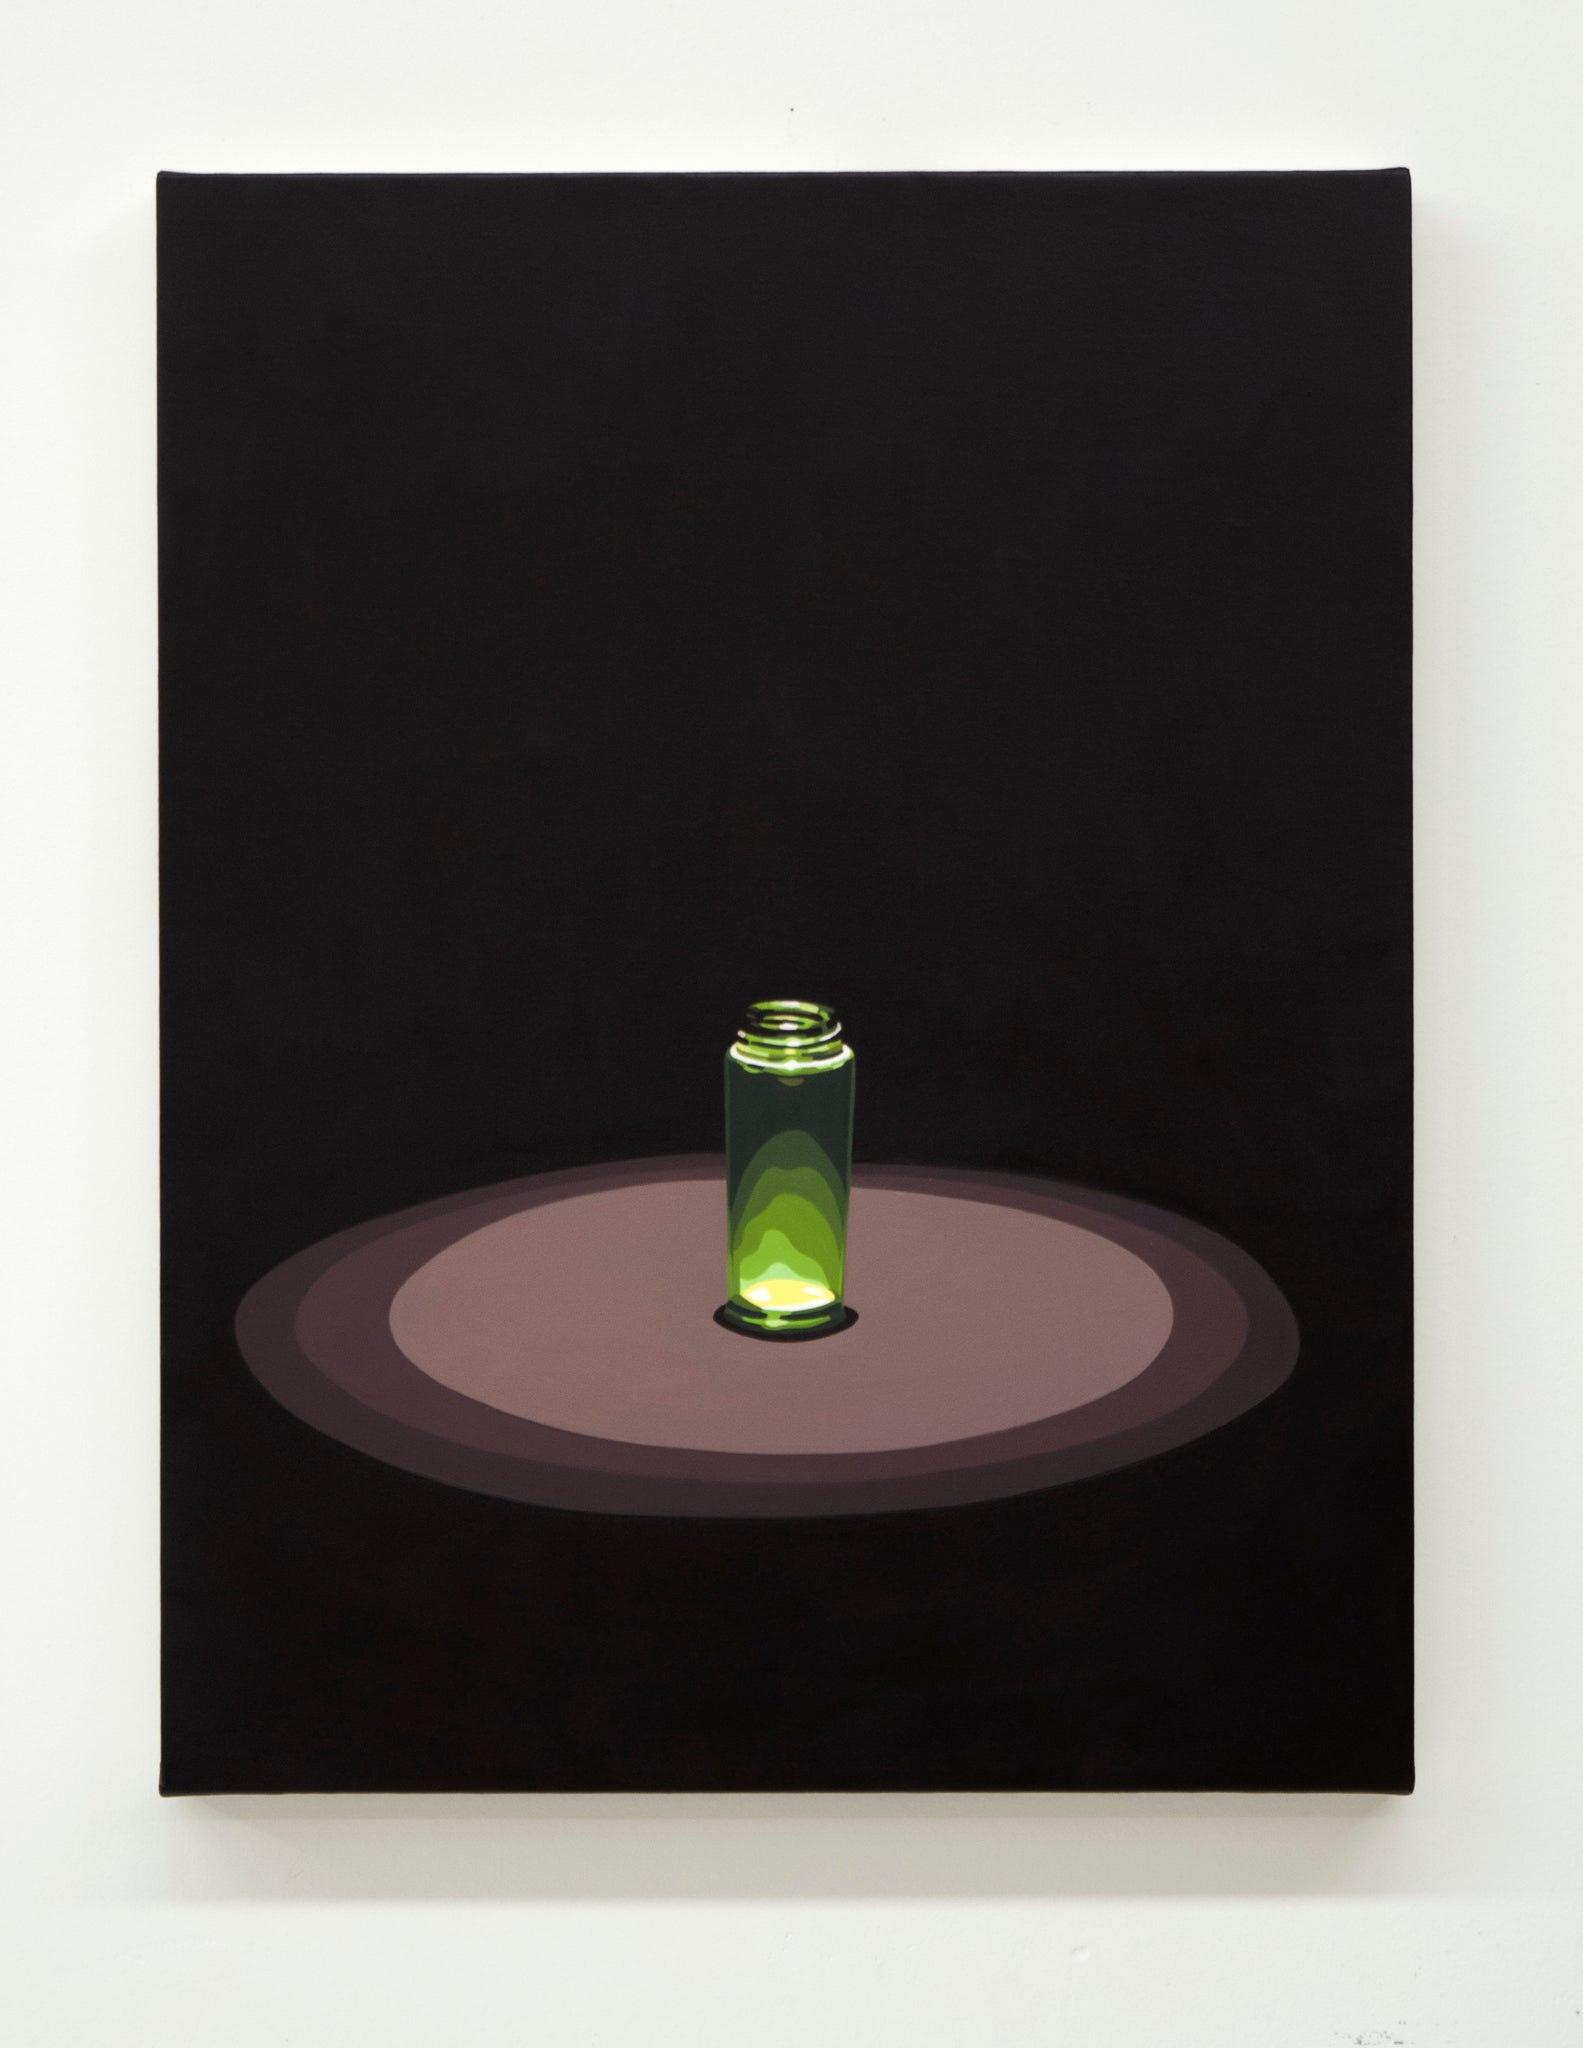 Richard Pasquarelli, "Relic (Bottle)" SOLDBD